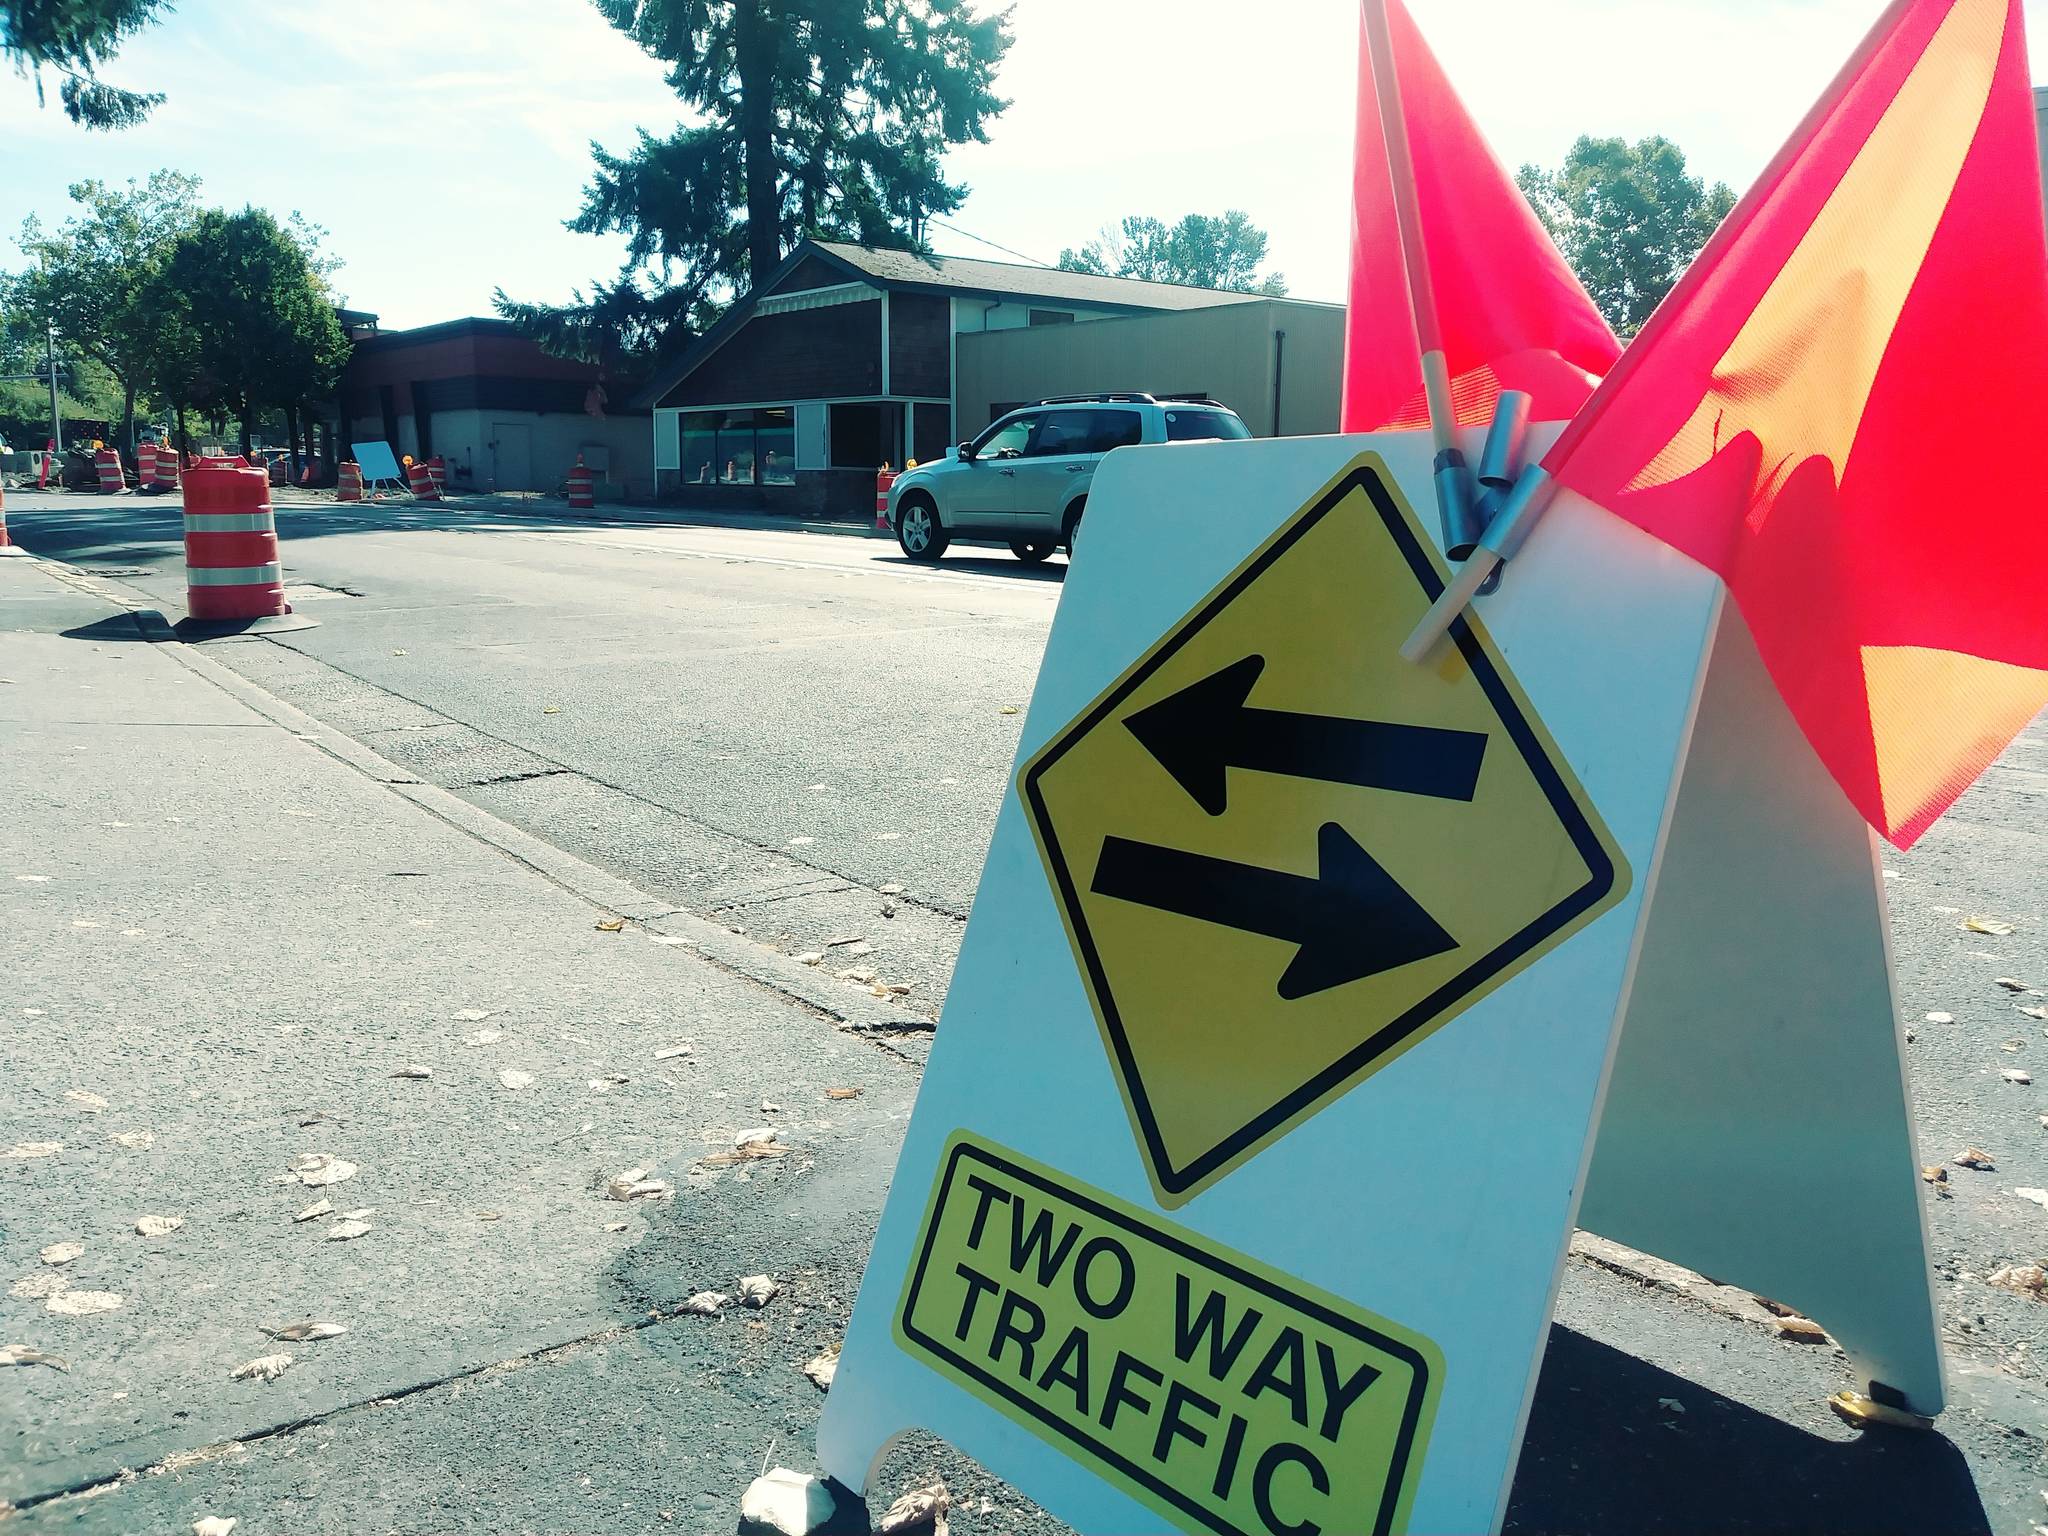 Two-way traffic was opened on Cleveland Street in Redmond last Friday. Aaron Kunkler/Redmond Reporter